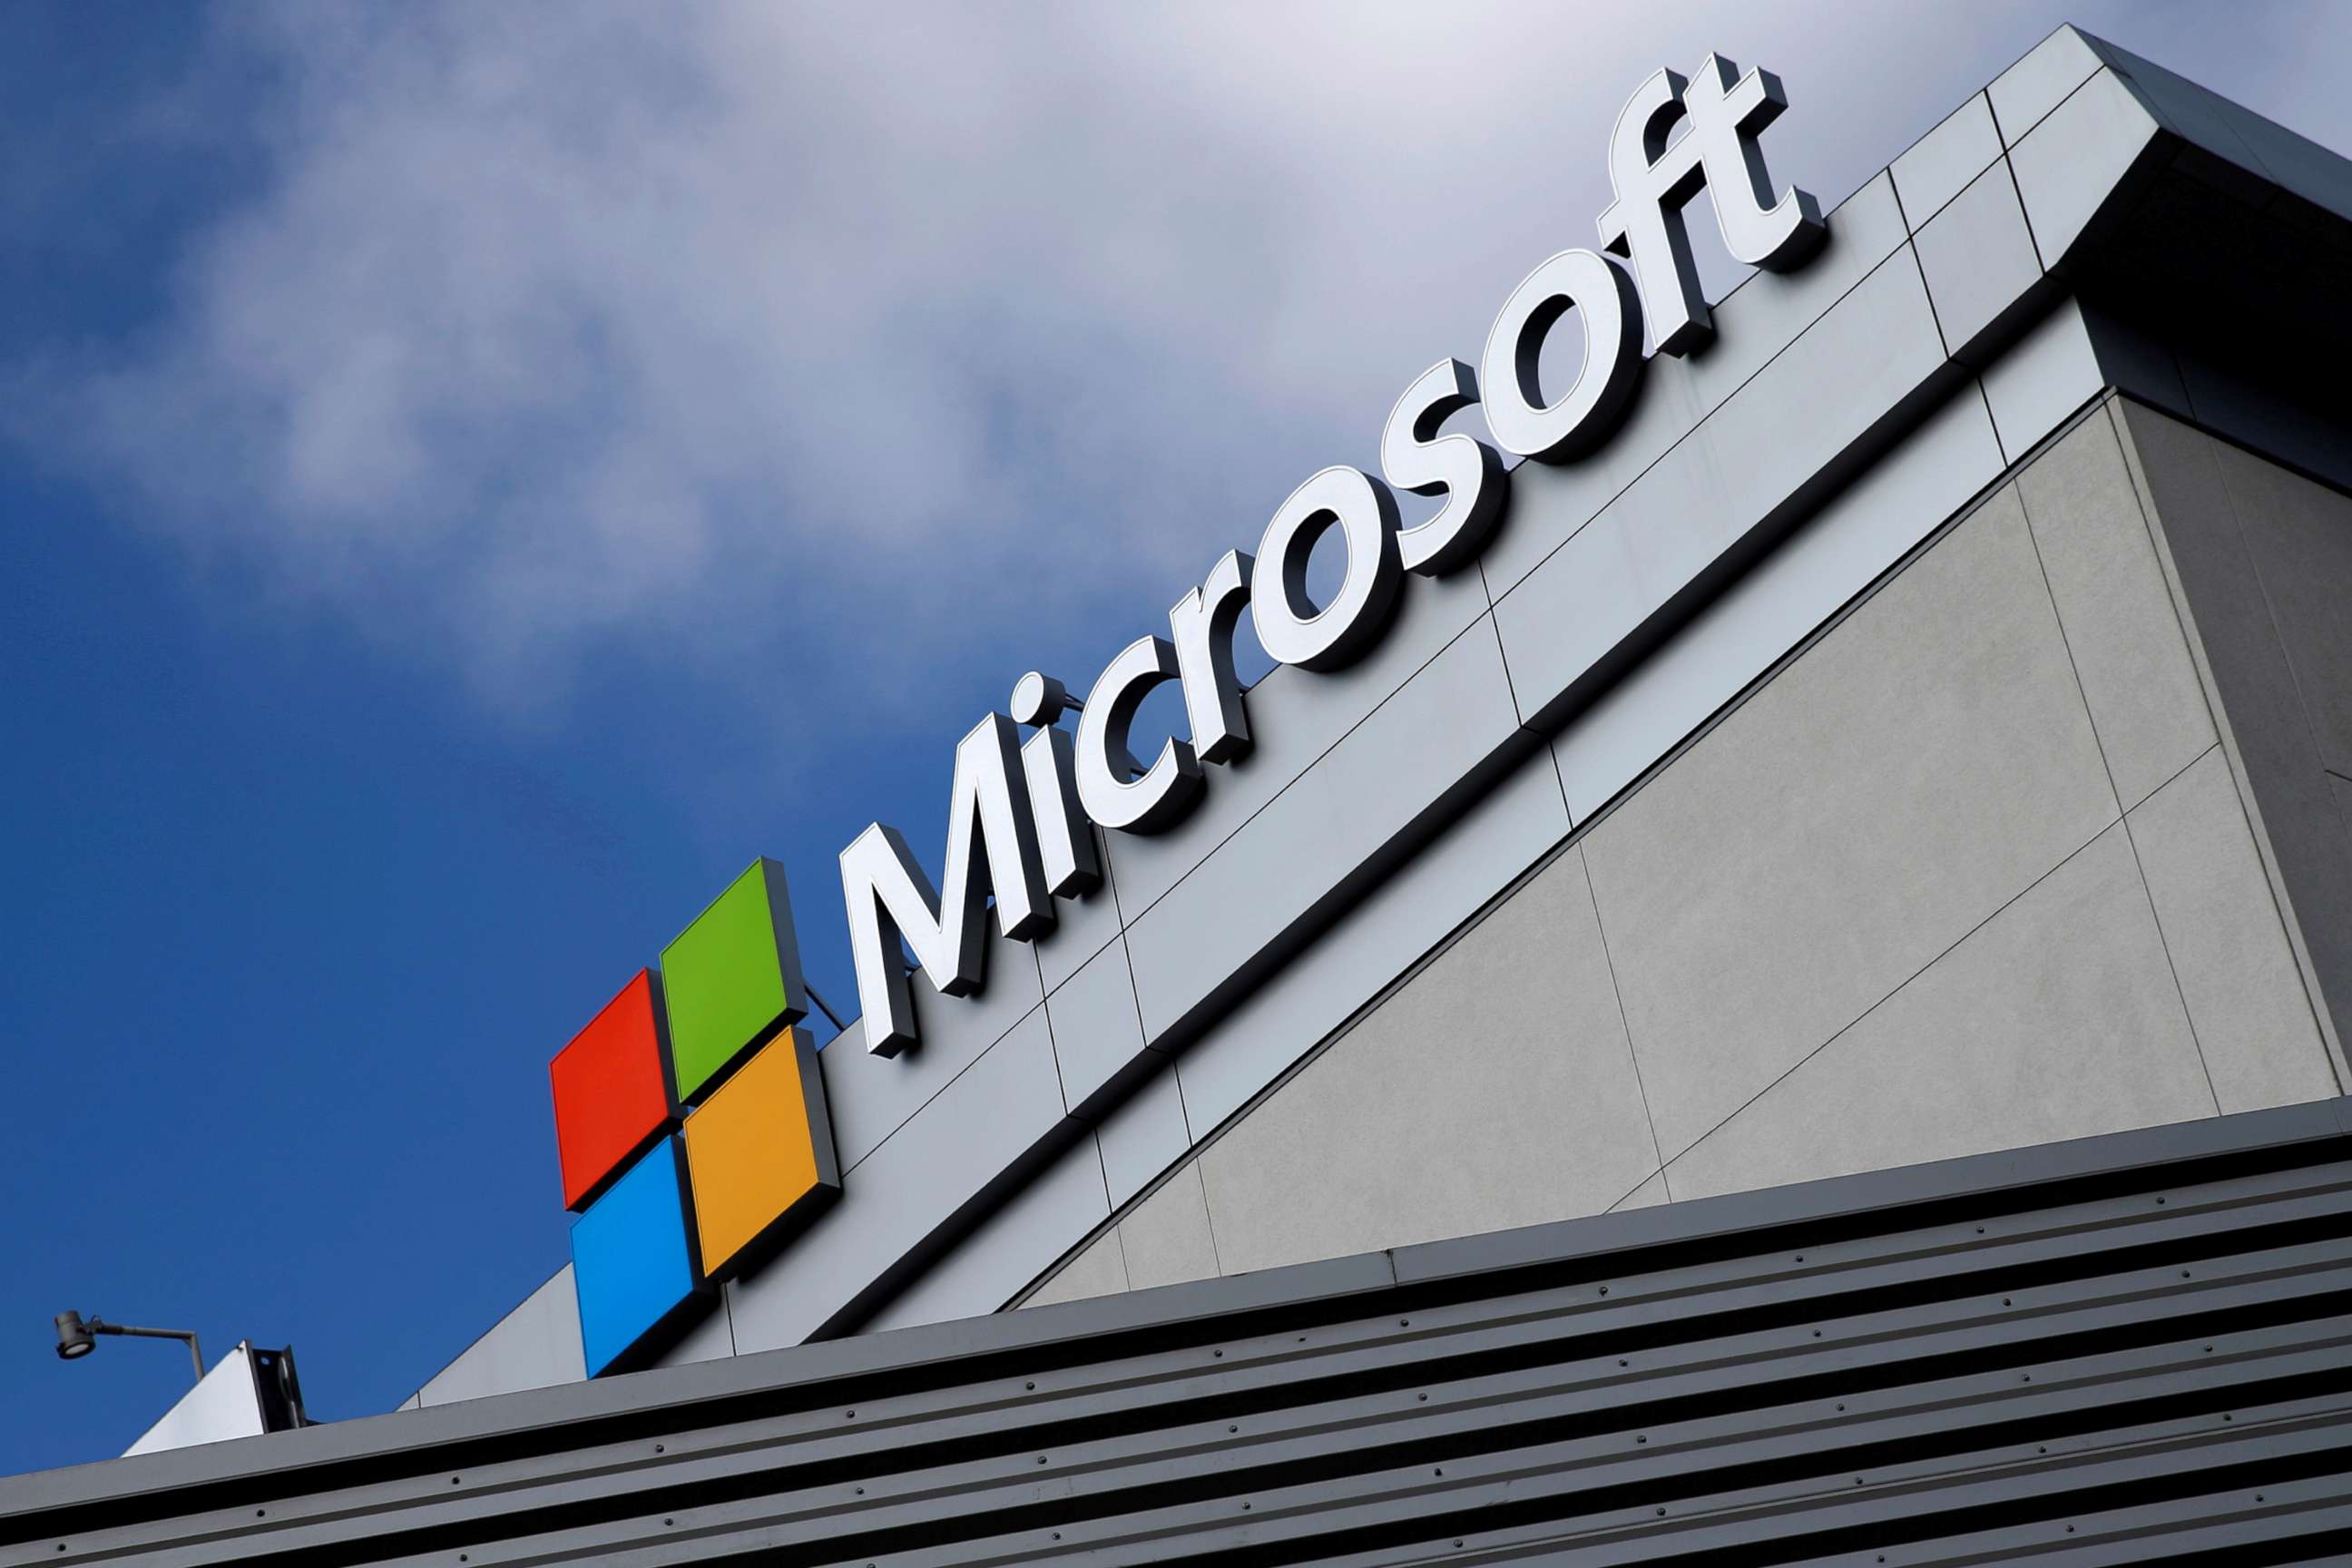 PHOTO: A Microsoft logo is seen in Los Angeles, June 14, 2016.